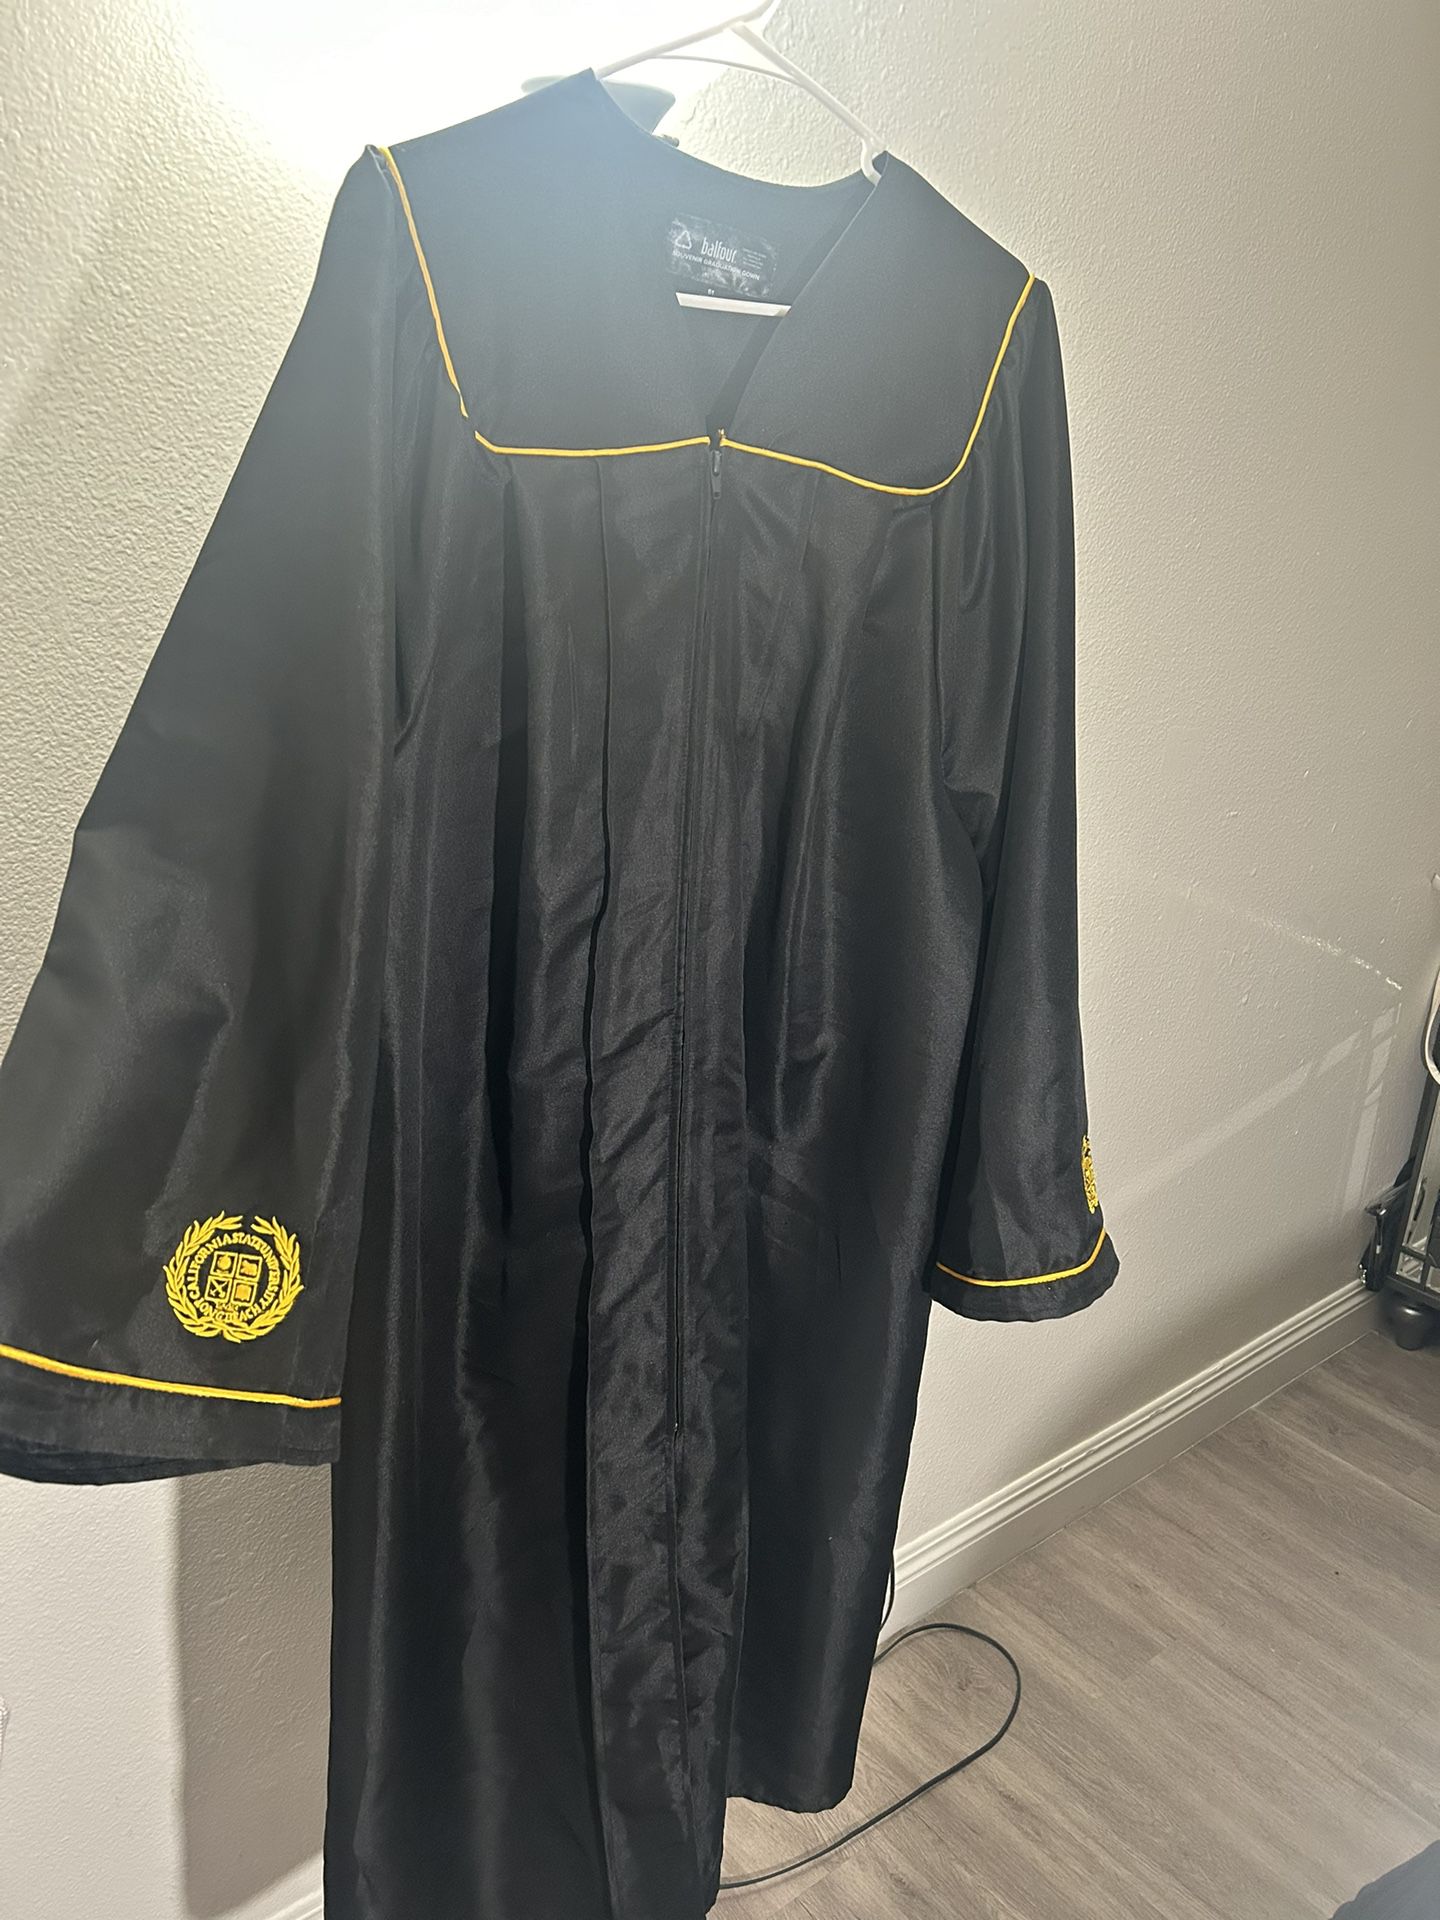 CSULB Original Graduation Gown